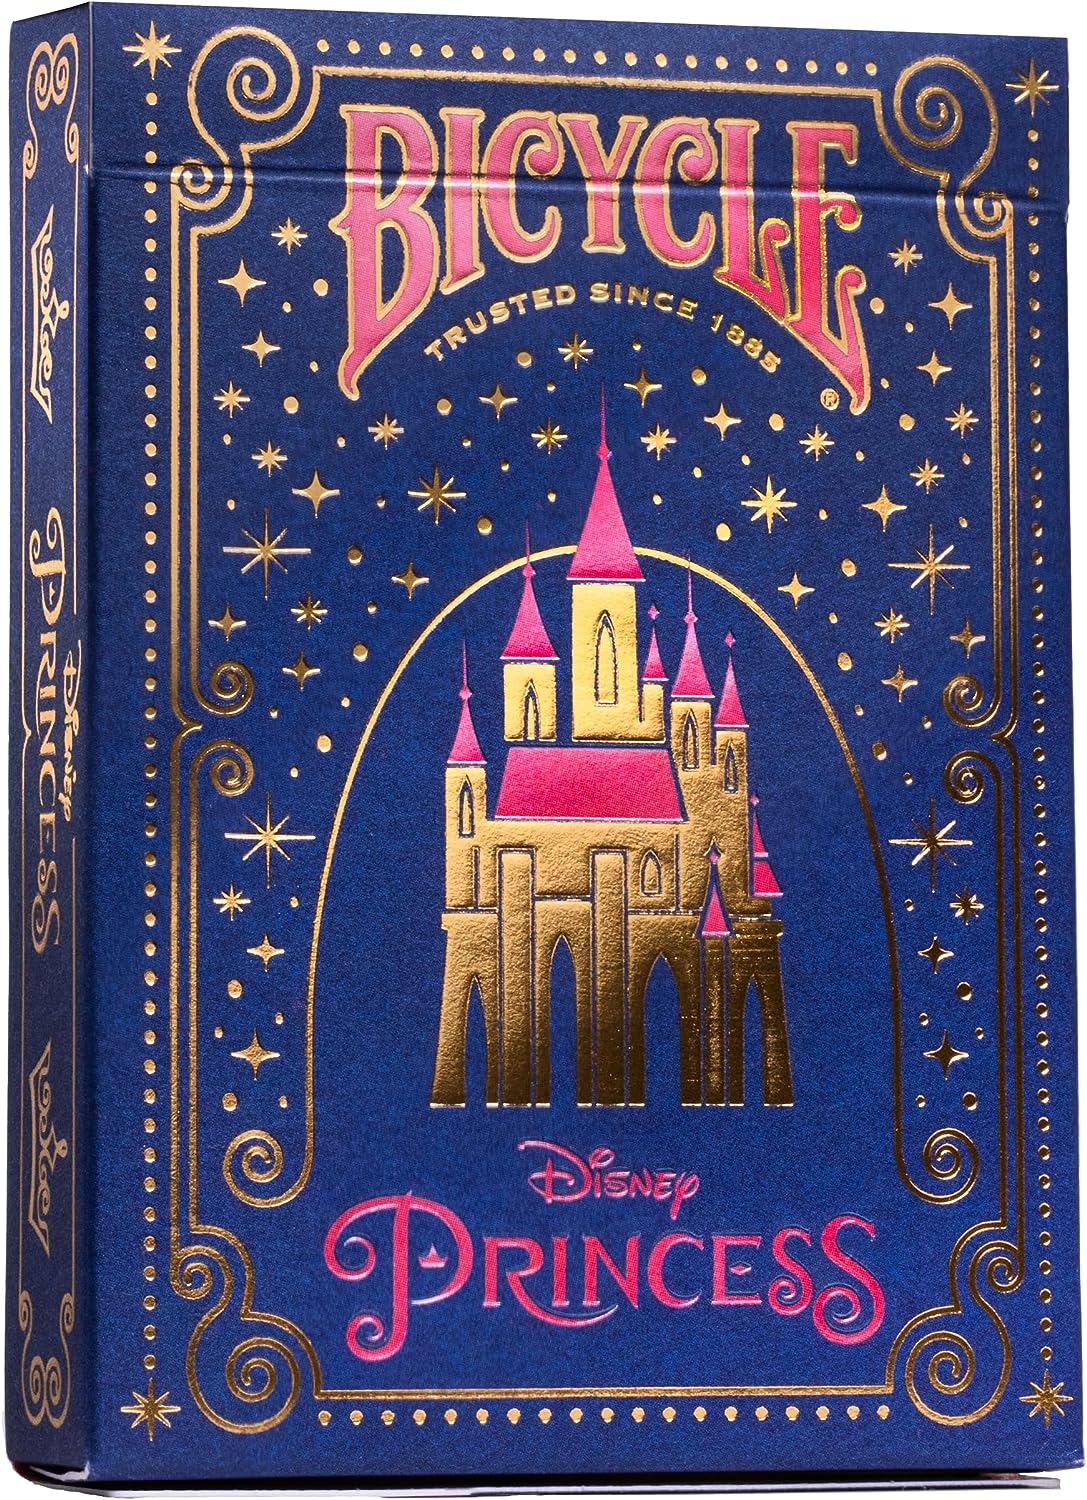 Bicycle Playing Cards: Disney Princess: Navy 